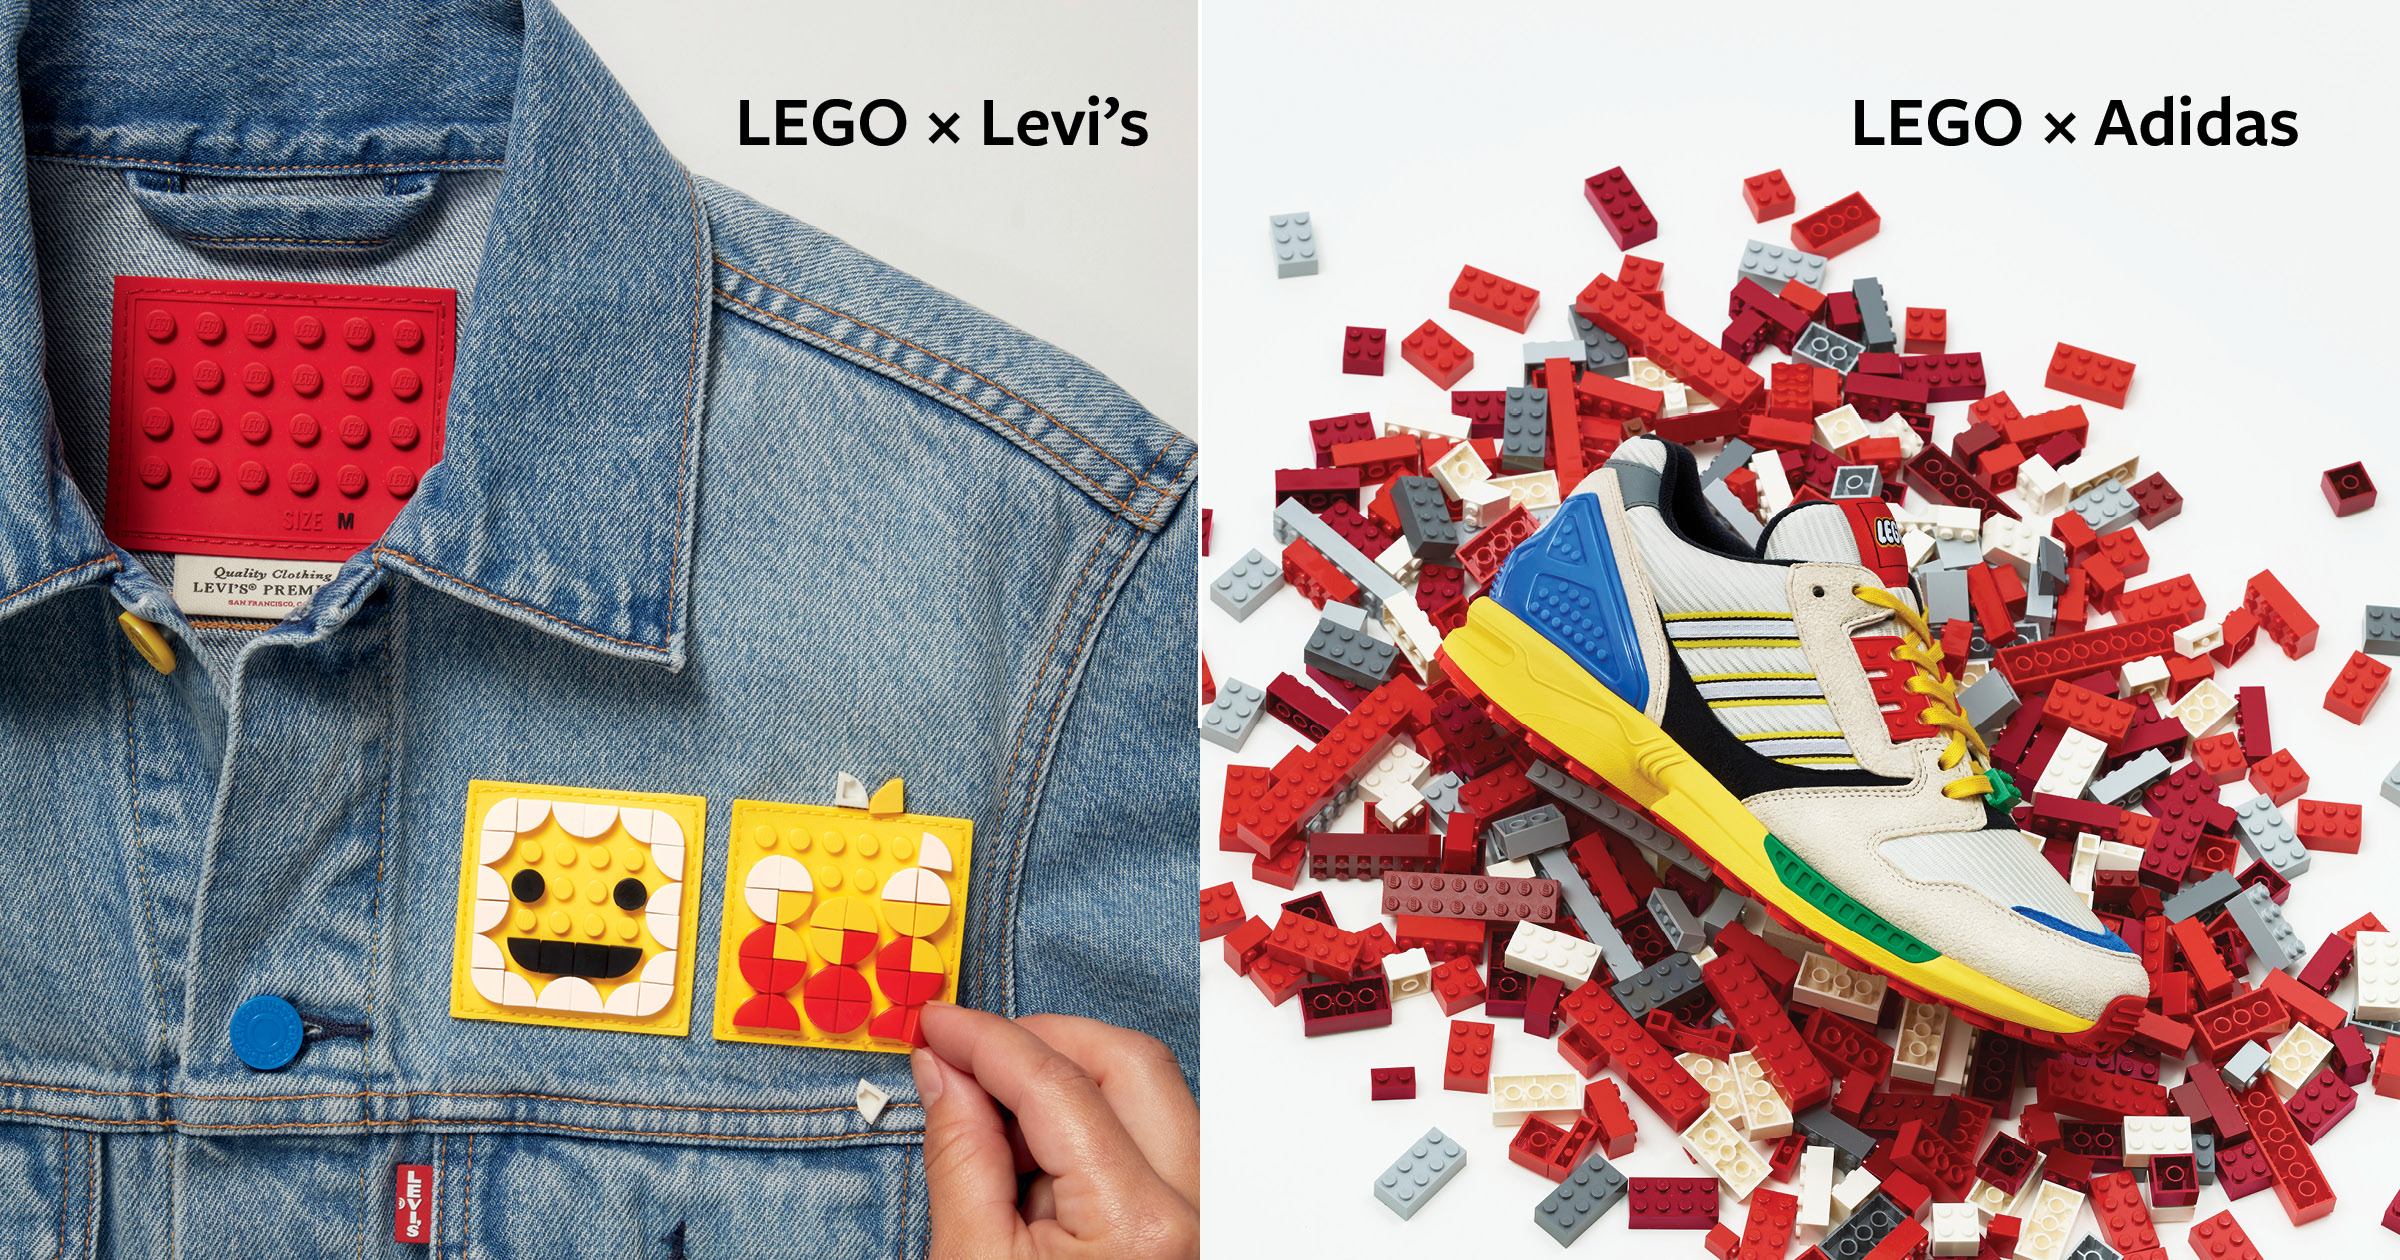 Co-branding for AFOLs: LEGO × [Adidas/Levi's/IKEA] - BRICK ARCHITECT